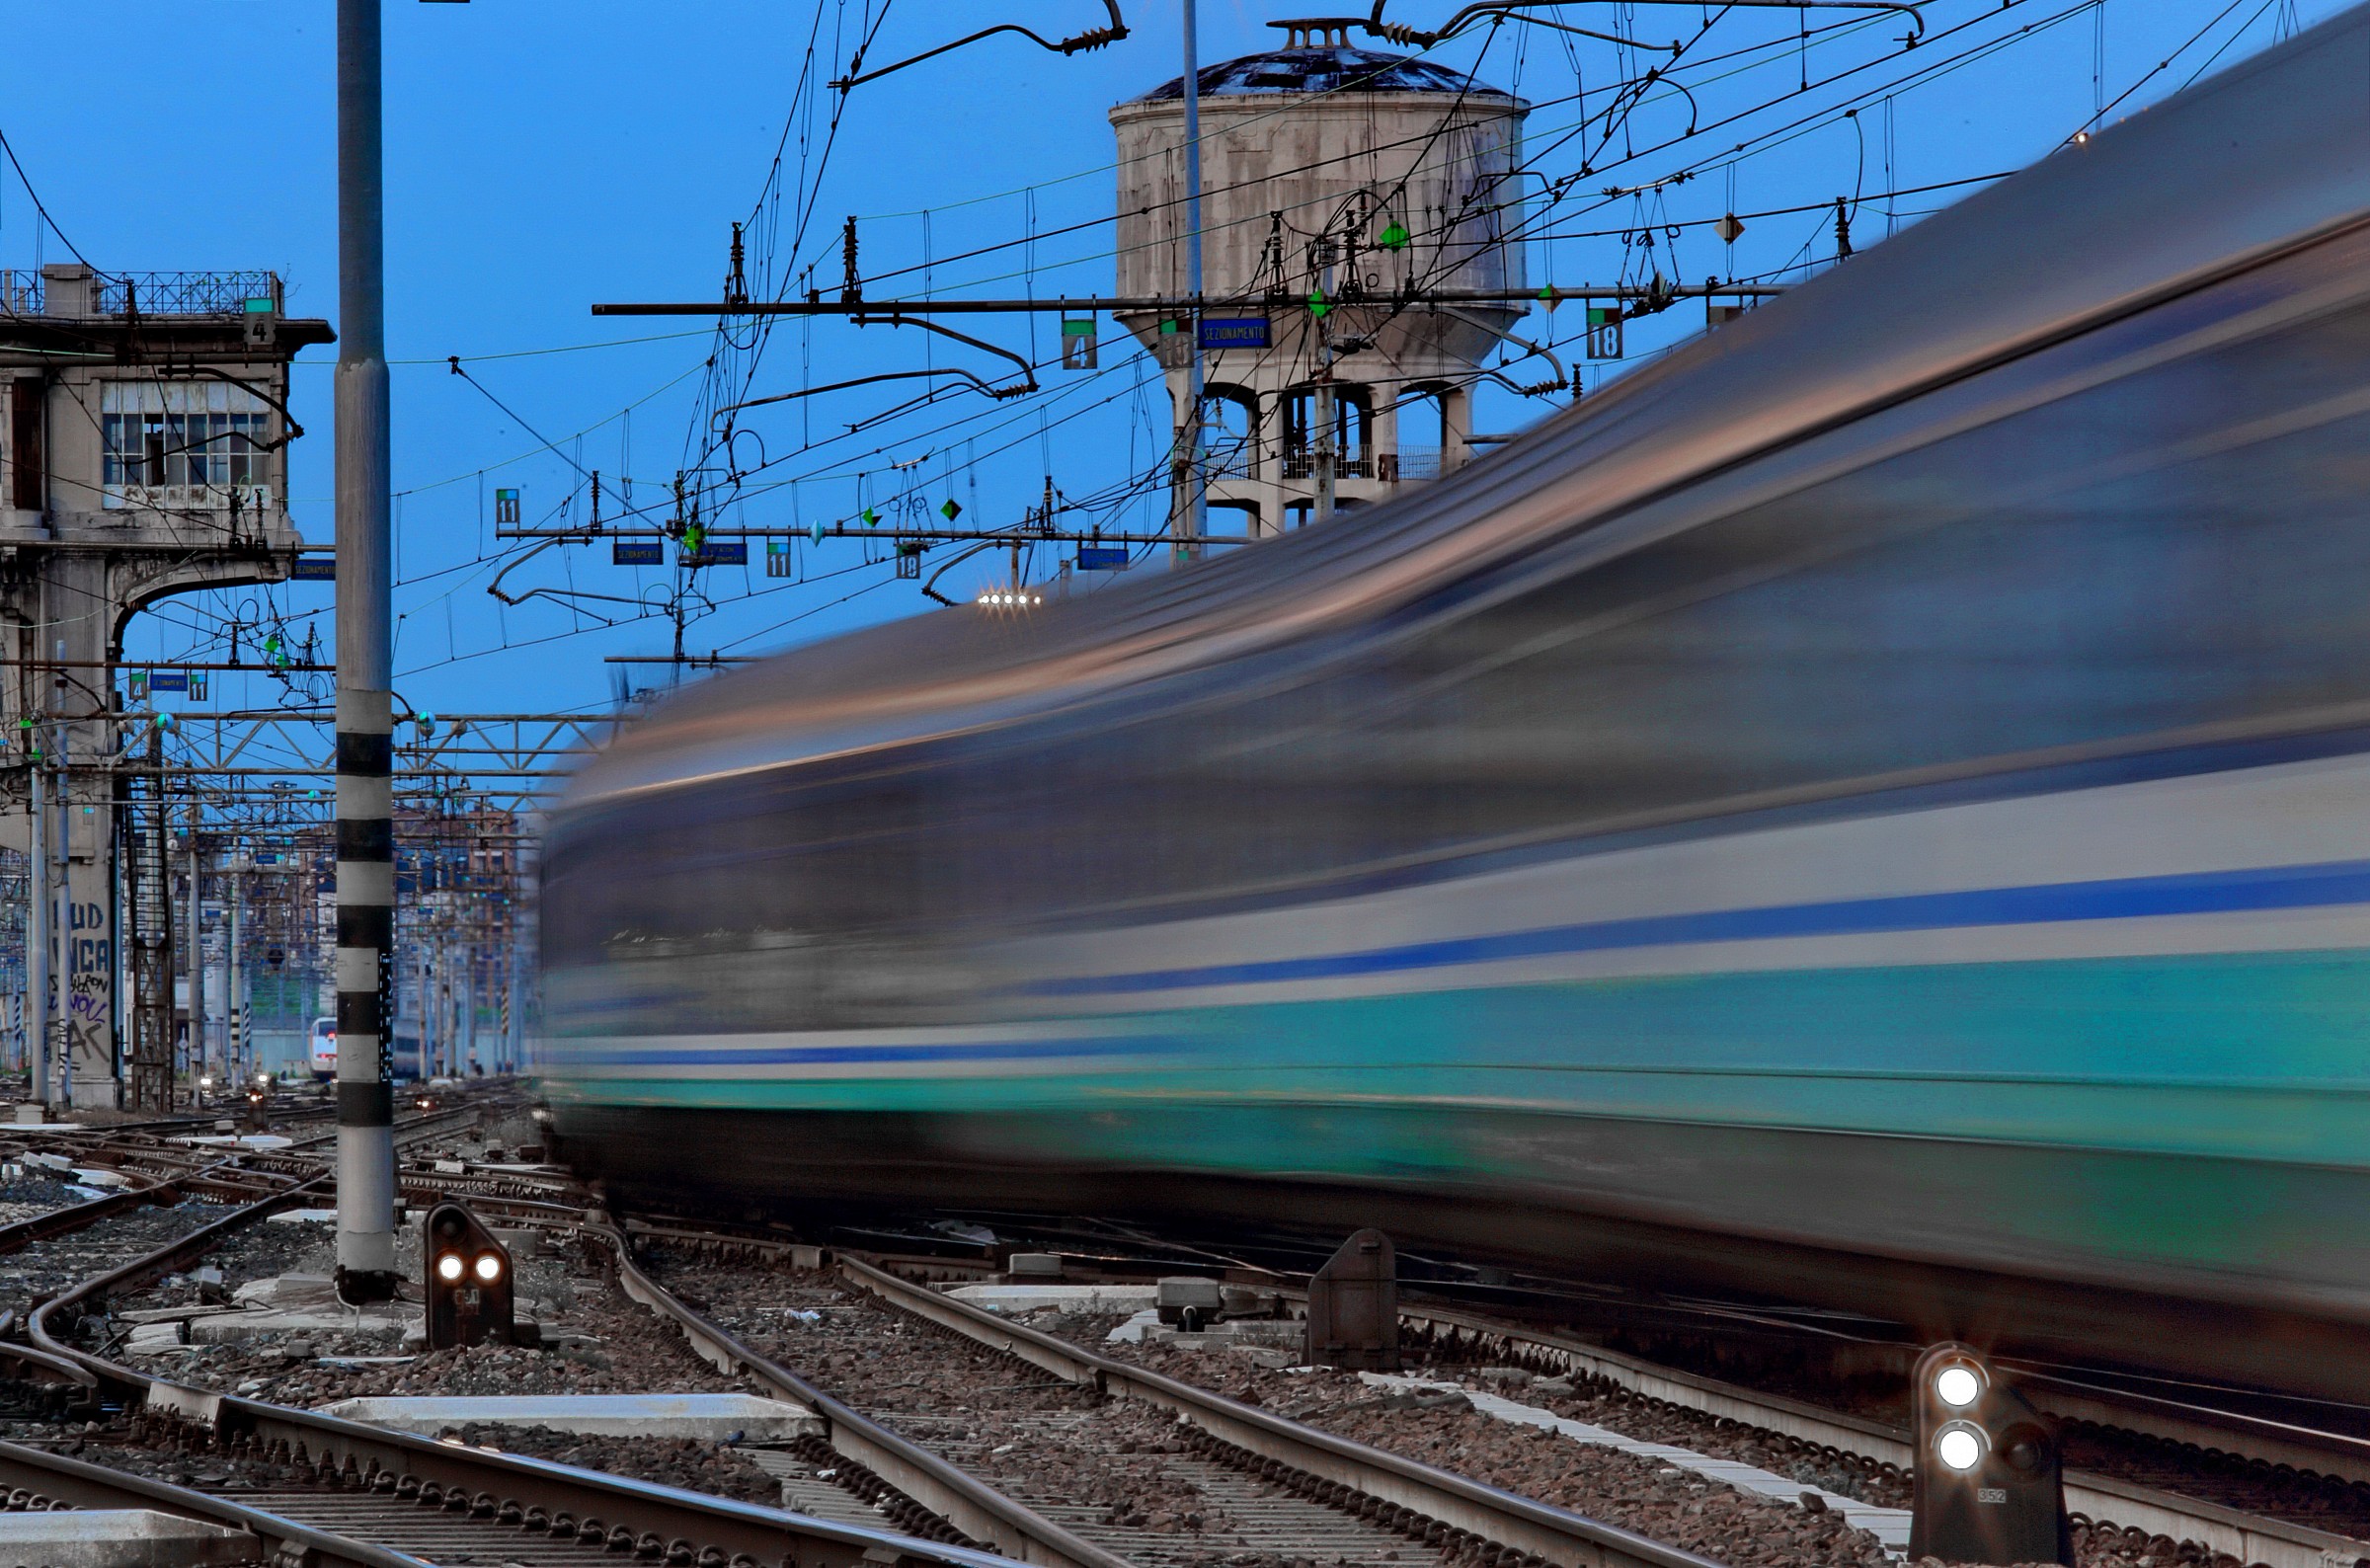 winding train - Milan railway station...